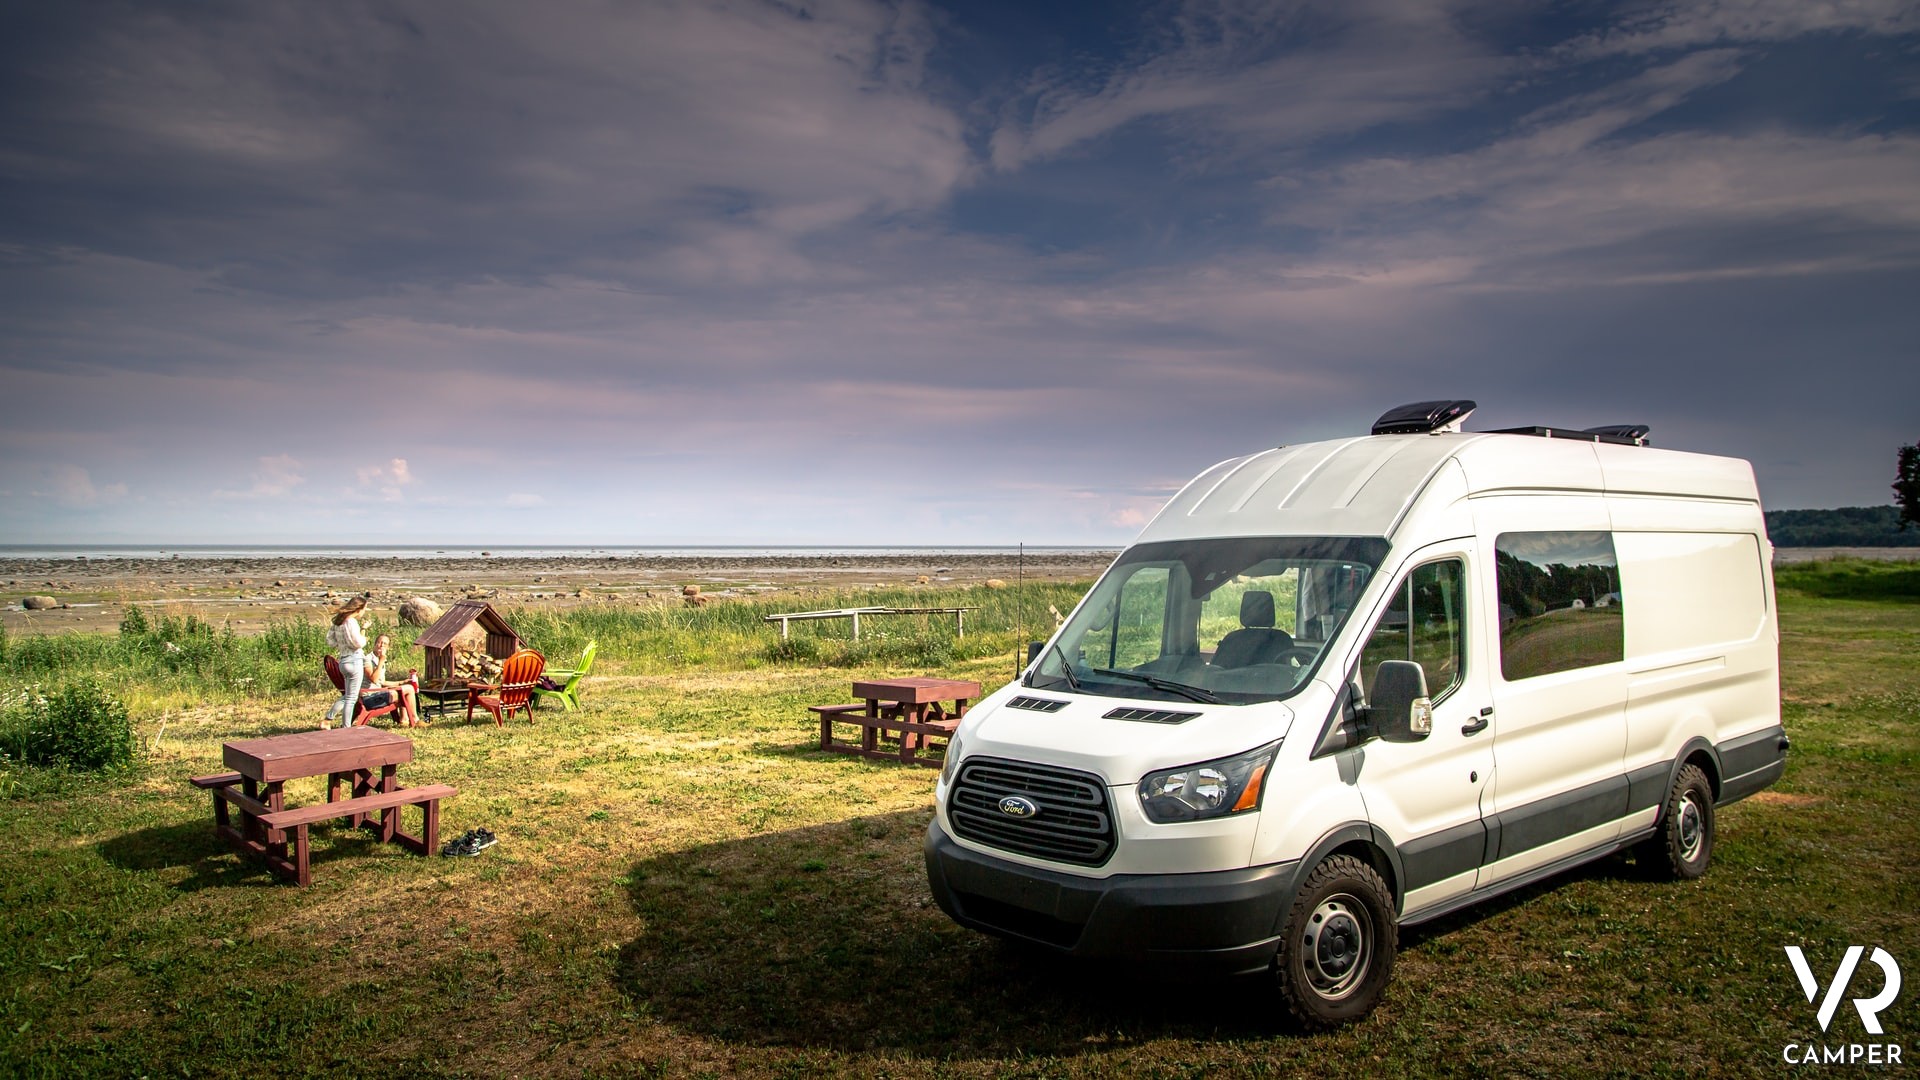 Camper Van RV - What is the most reliable campervan